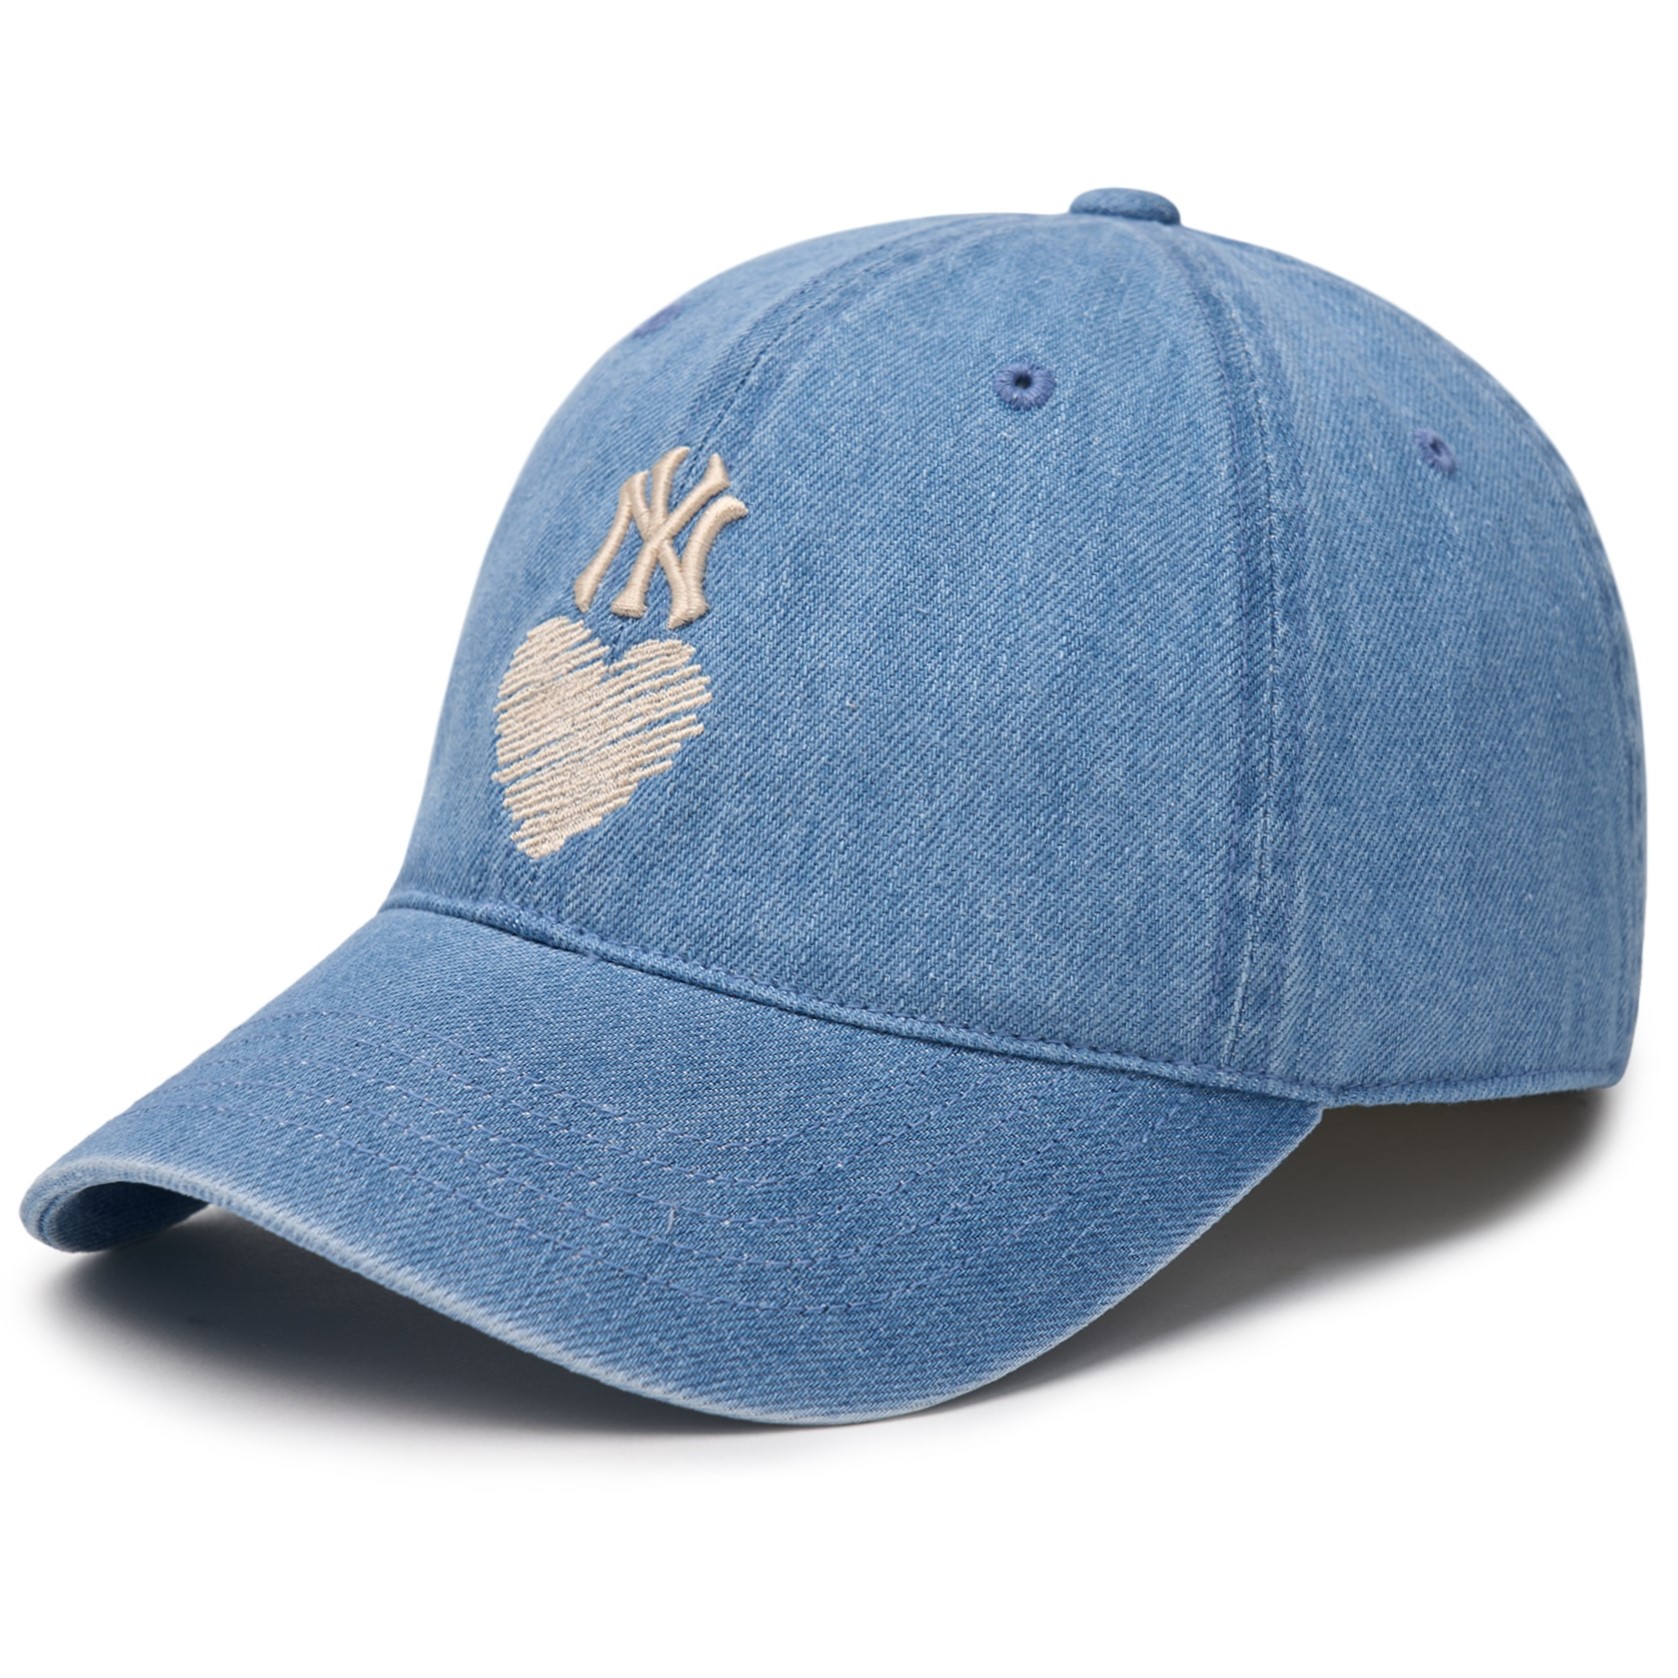 NÓN LƯỠI TRAI MLB NY BLUE DENIM HEART UNSTRUCTURED BALL CAP NEW YORK YANKEES 3ACPH024N-50BLL 6